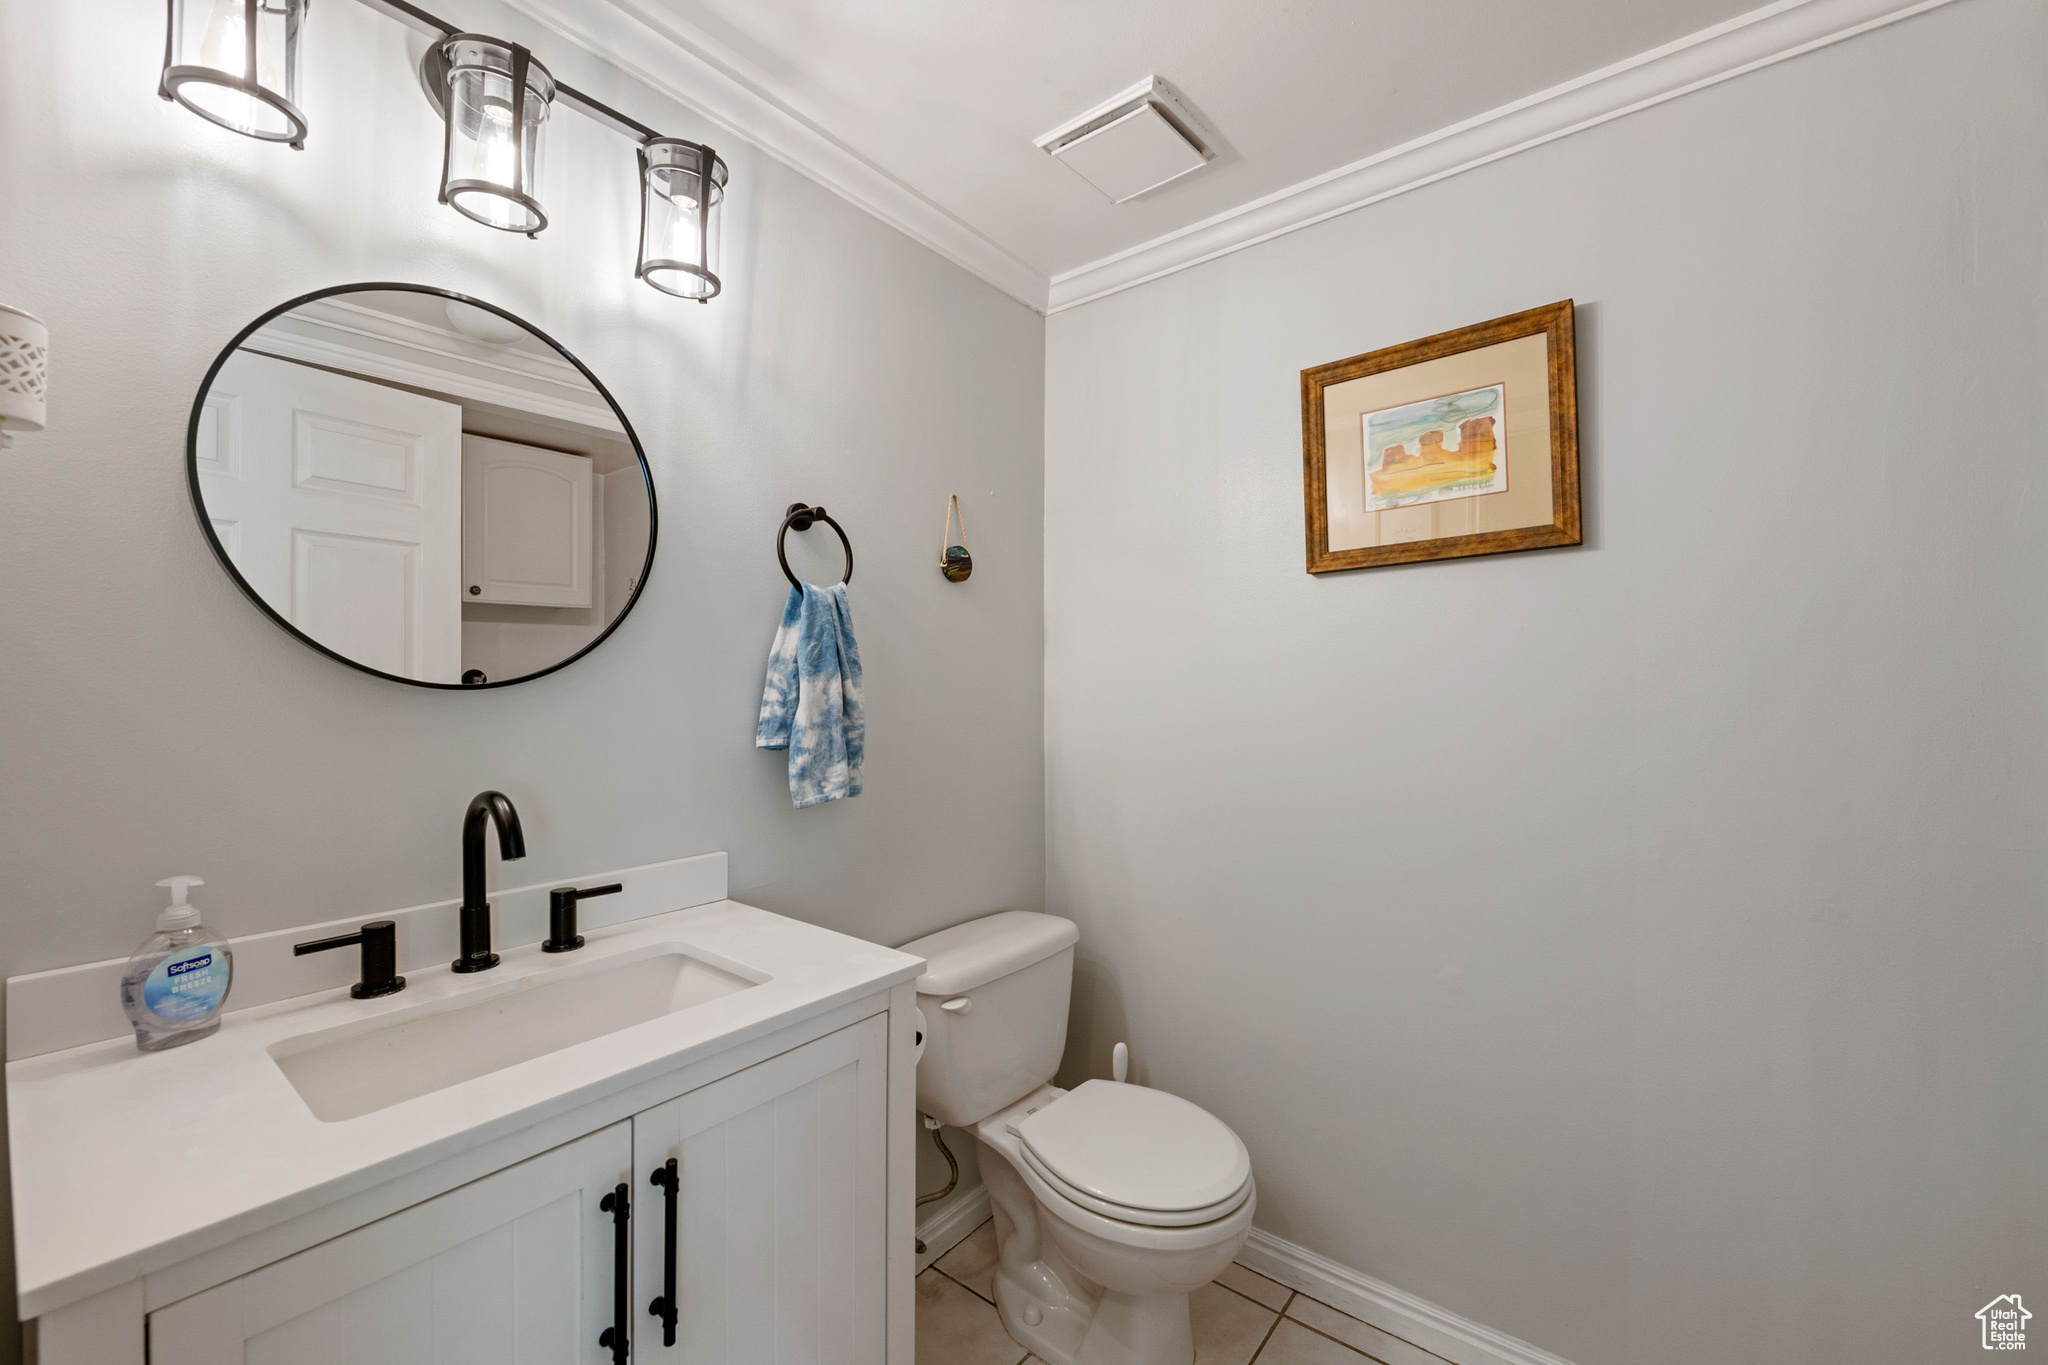 Bathroom featuring tile floors, crown molding, toilet, and large vanity